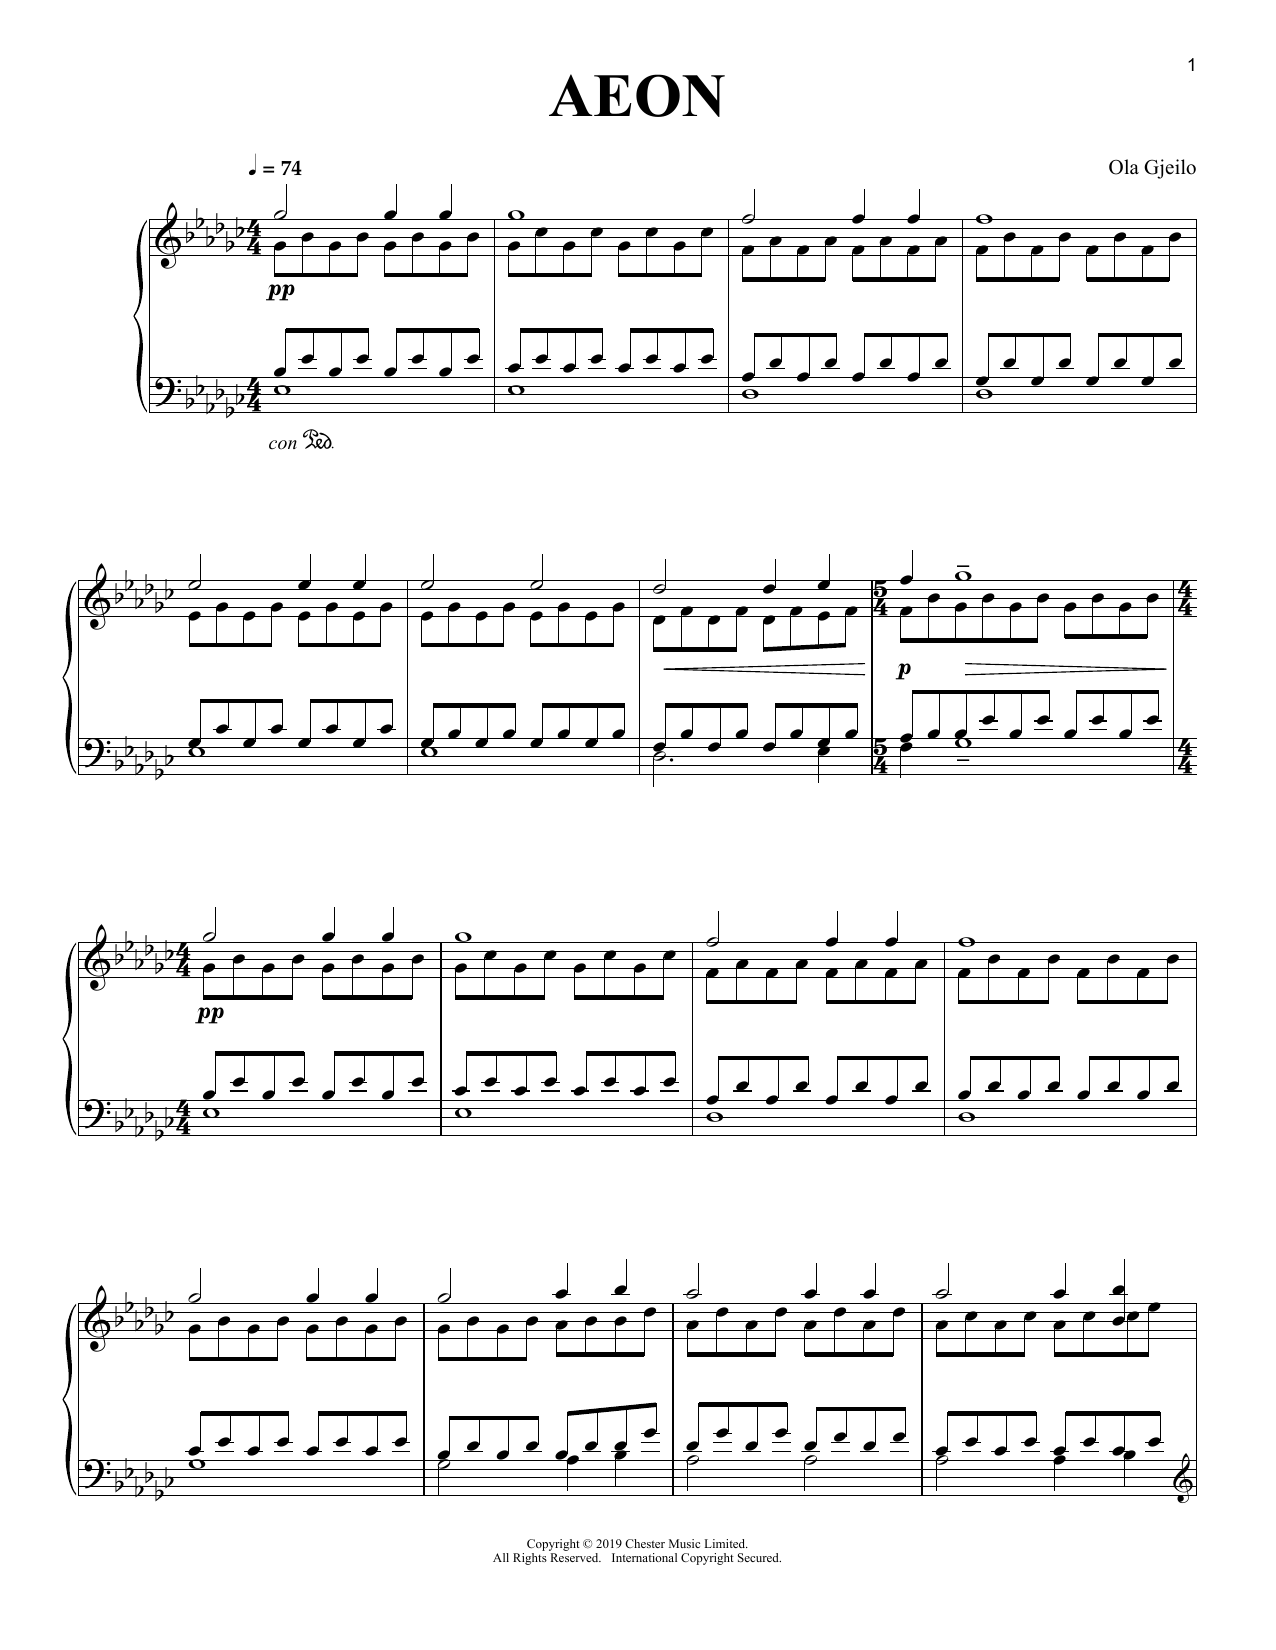 Ola Gjeilo Aeon Sheet Music Notes & Chords for Piano Solo - Download or Print PDF